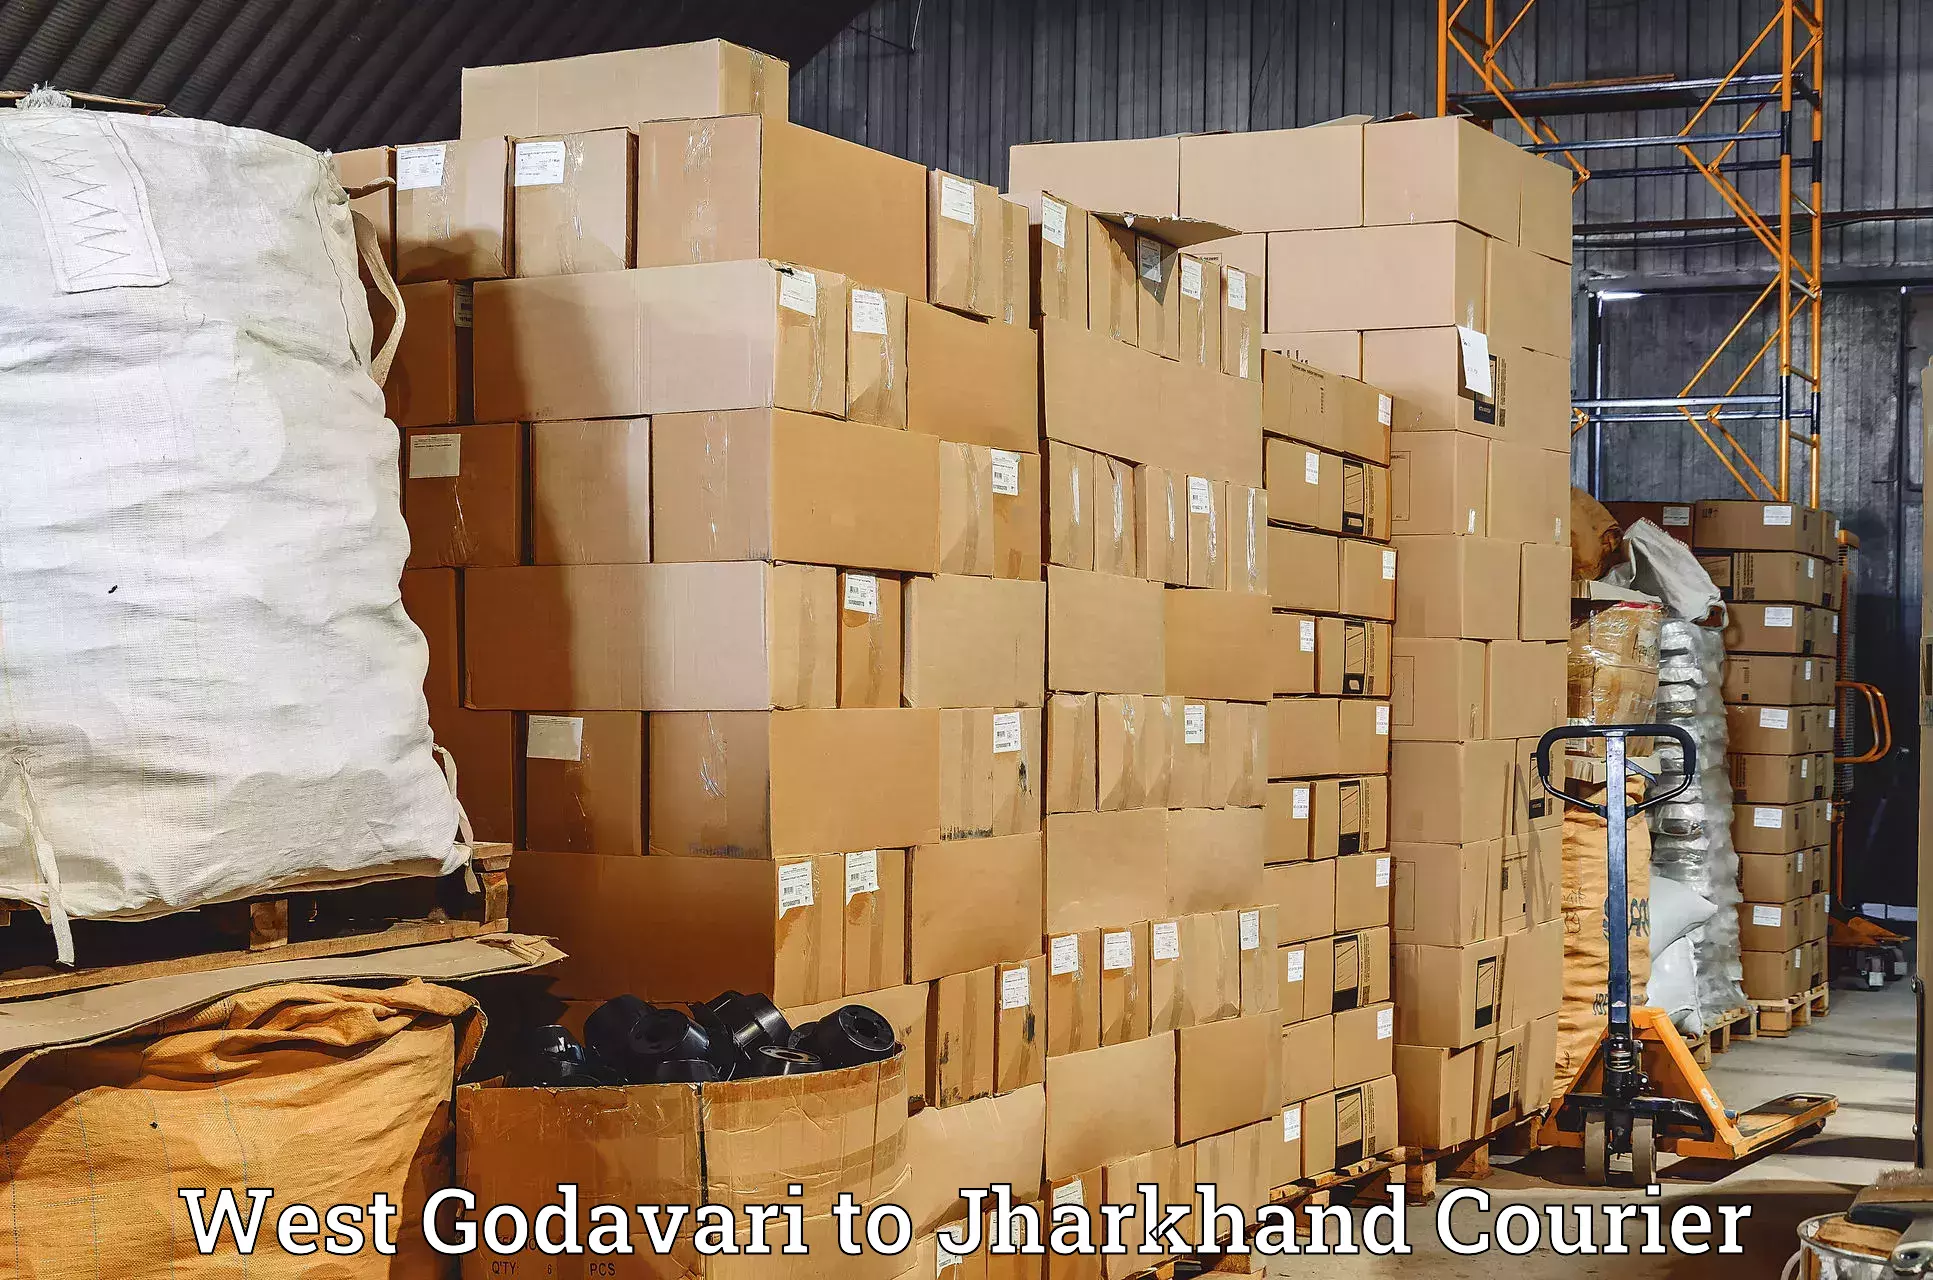 Reliable delivery network West Godavari to Shikaripara